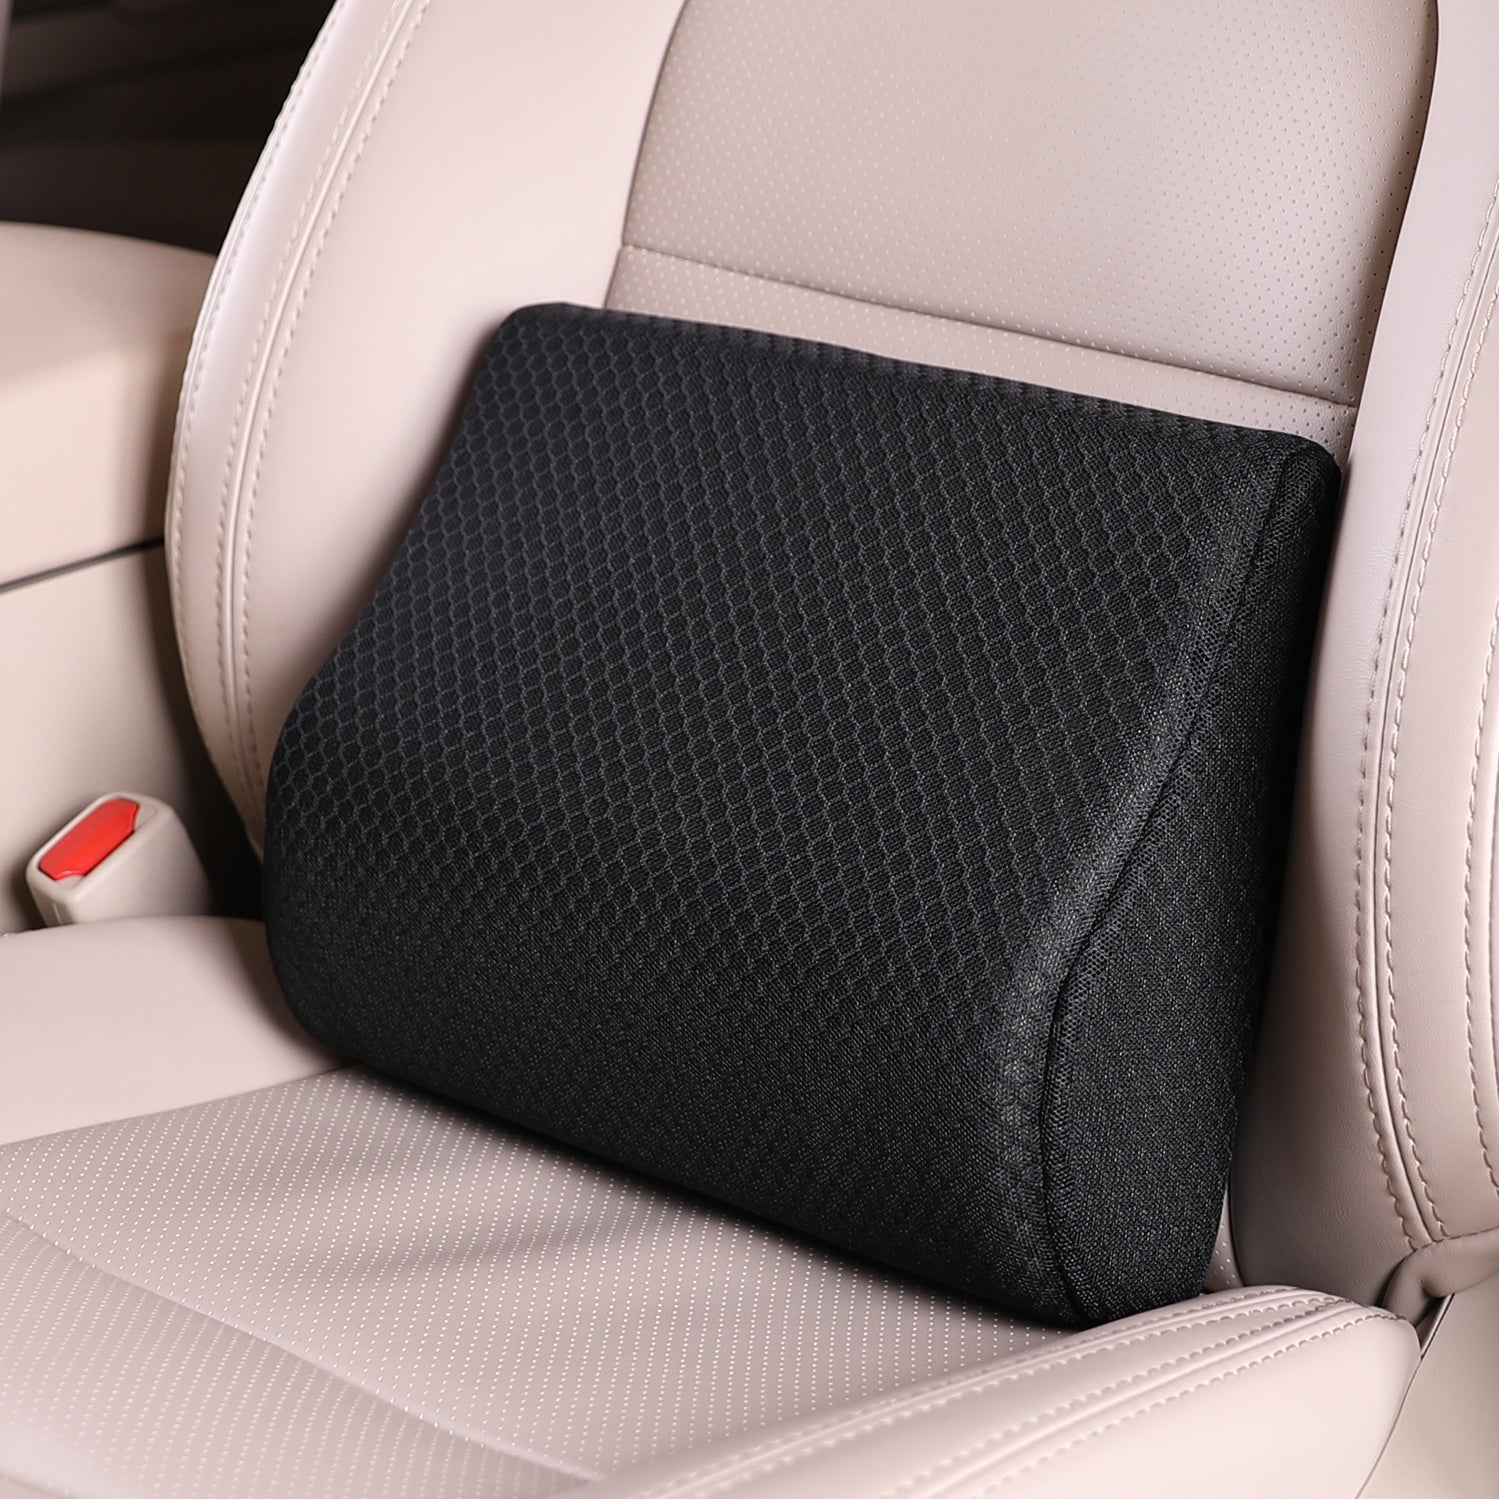 Car Seat Cushion, Comfort Memory Foam Car Cushions For Driving